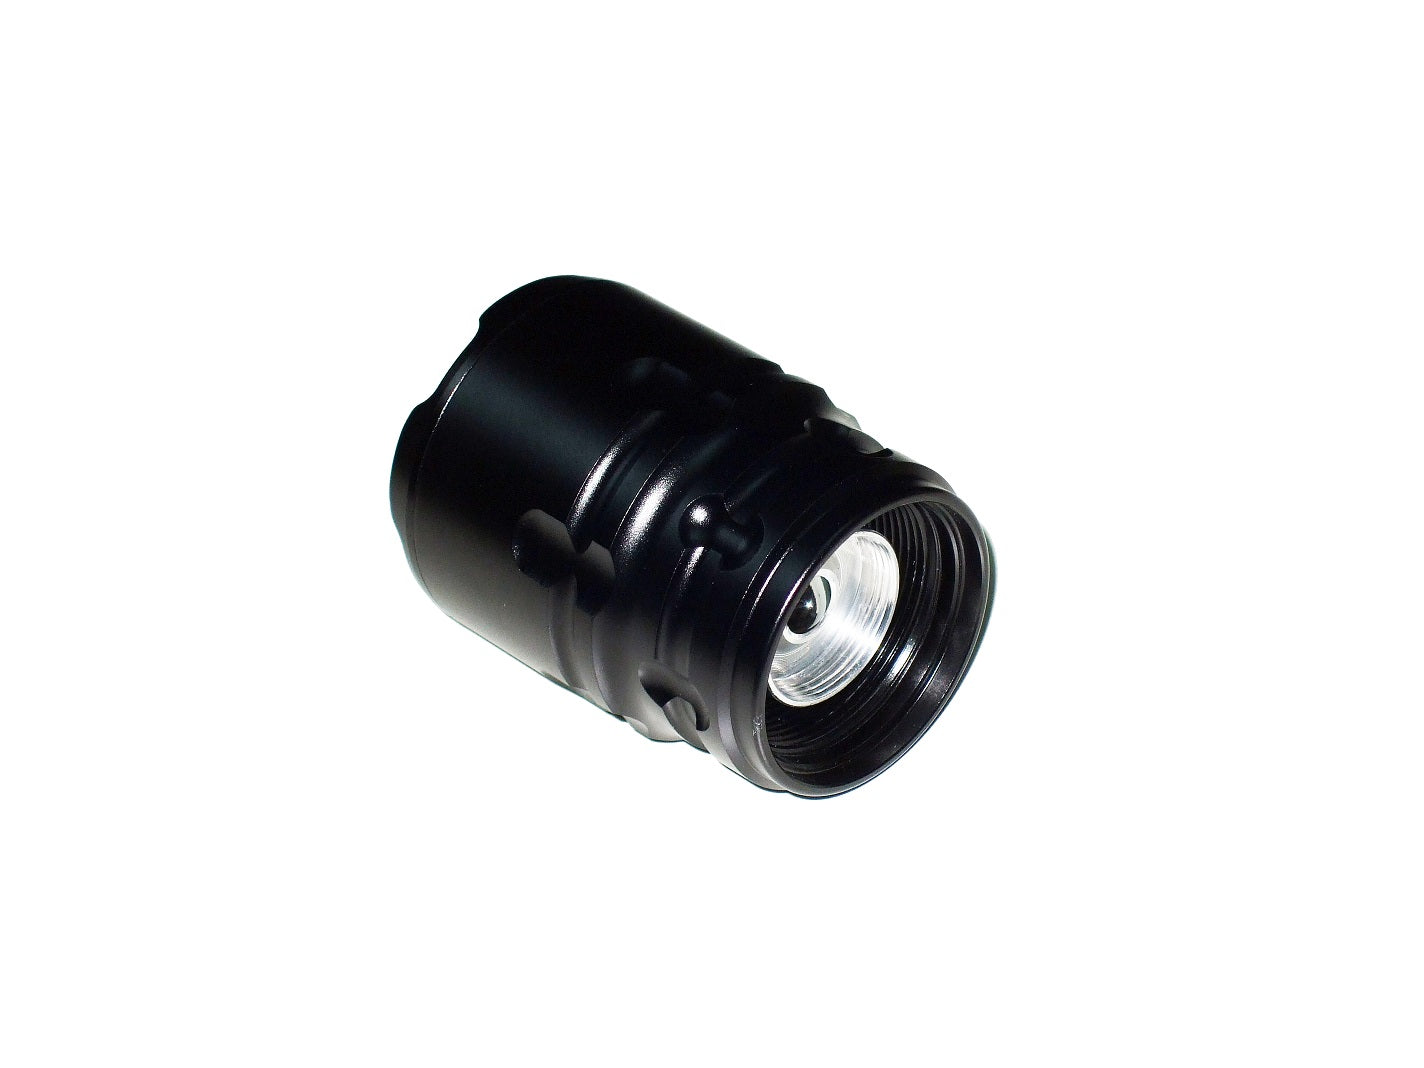 New UltraFire Upgrade Flashlight Torch Head For UltraFire L21